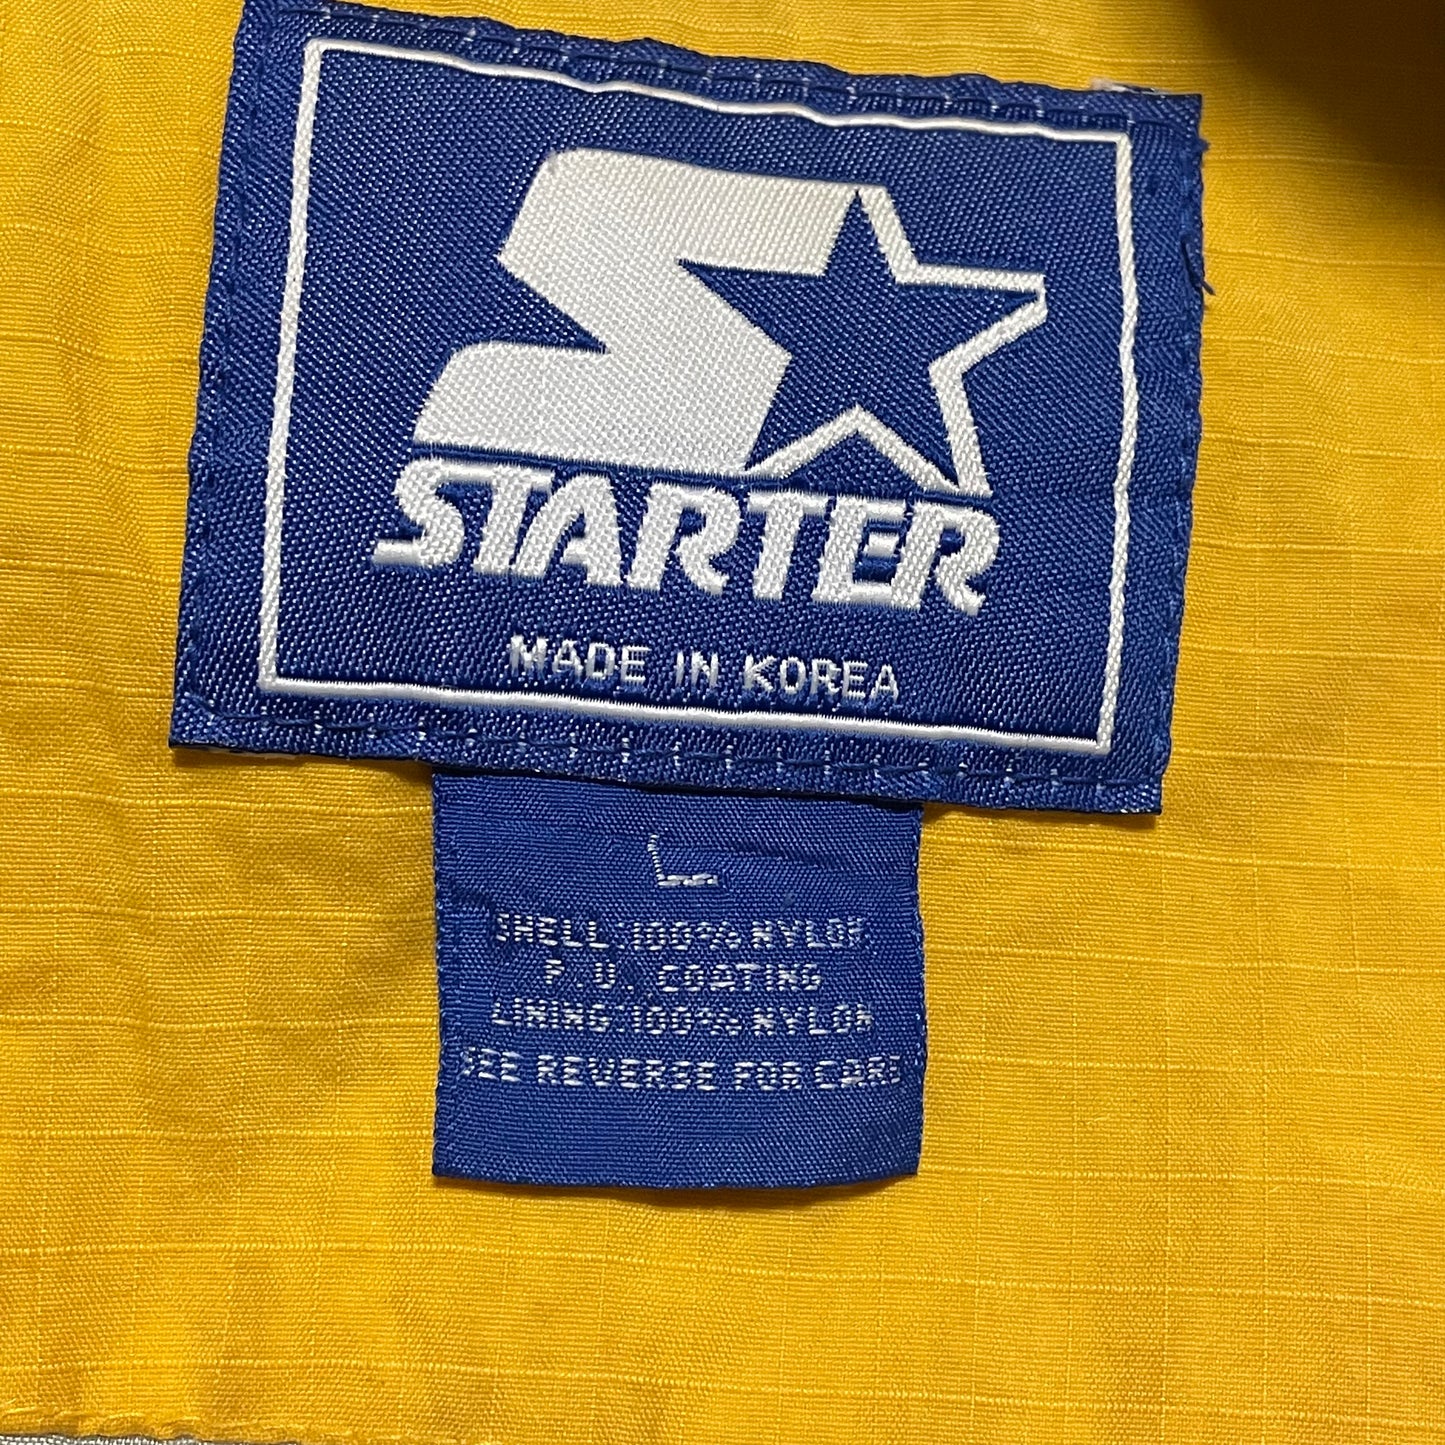 Vintage Michigan Wolverines Starter Pullover Jacket